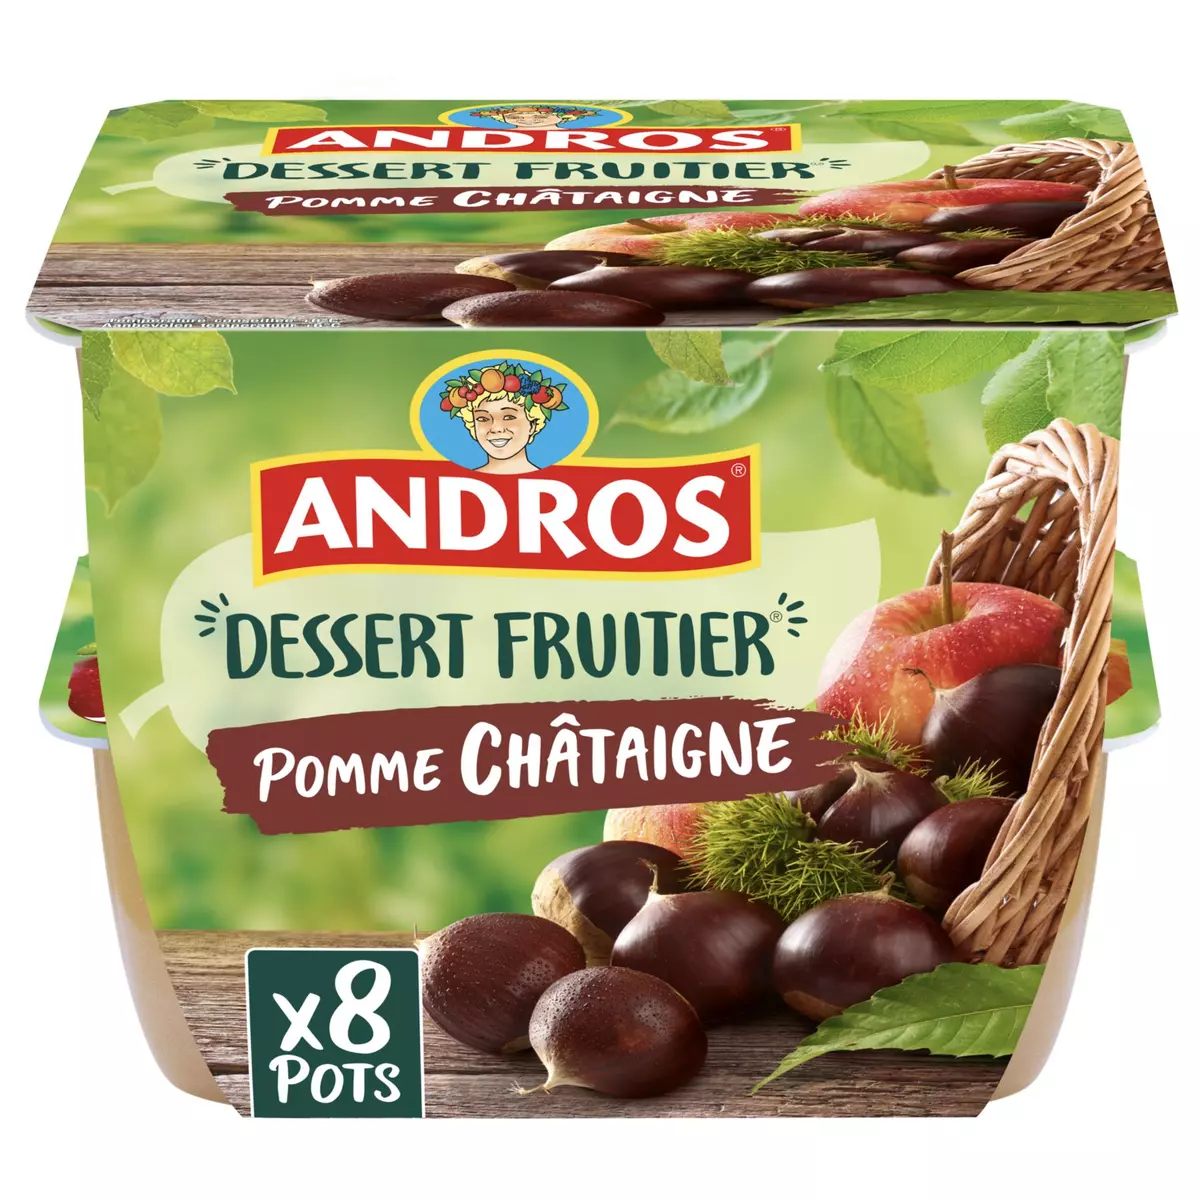 Dessert fruitier Pomme Châtaigne – Andros